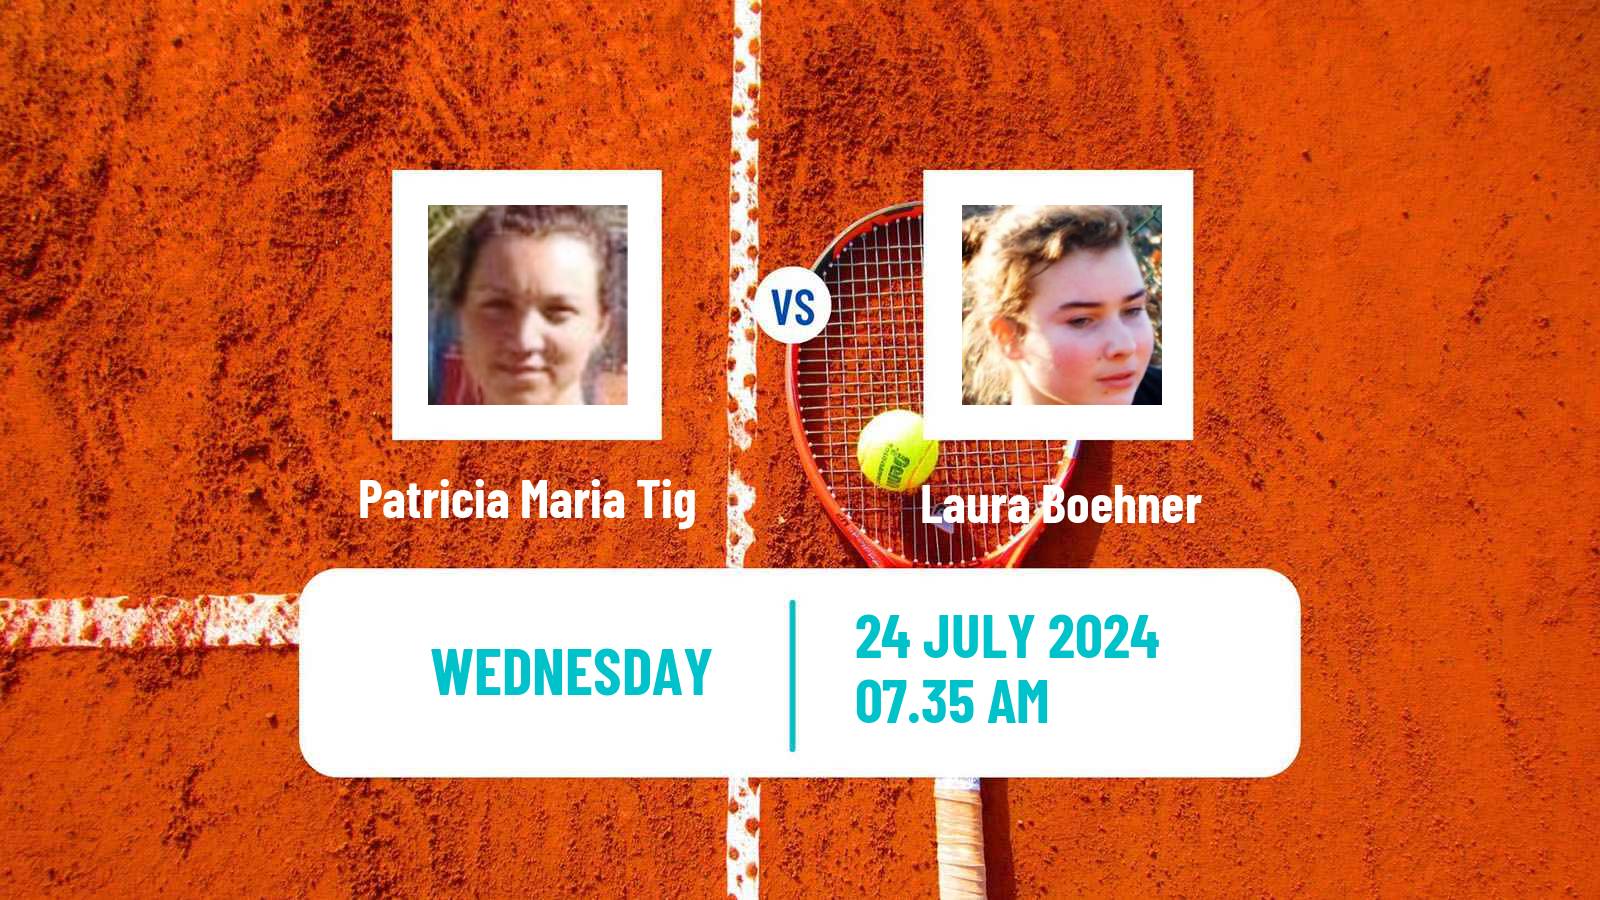 Tennis ITF W15 Satu Mare Women Patricia Maria Tig - Laura Boehner